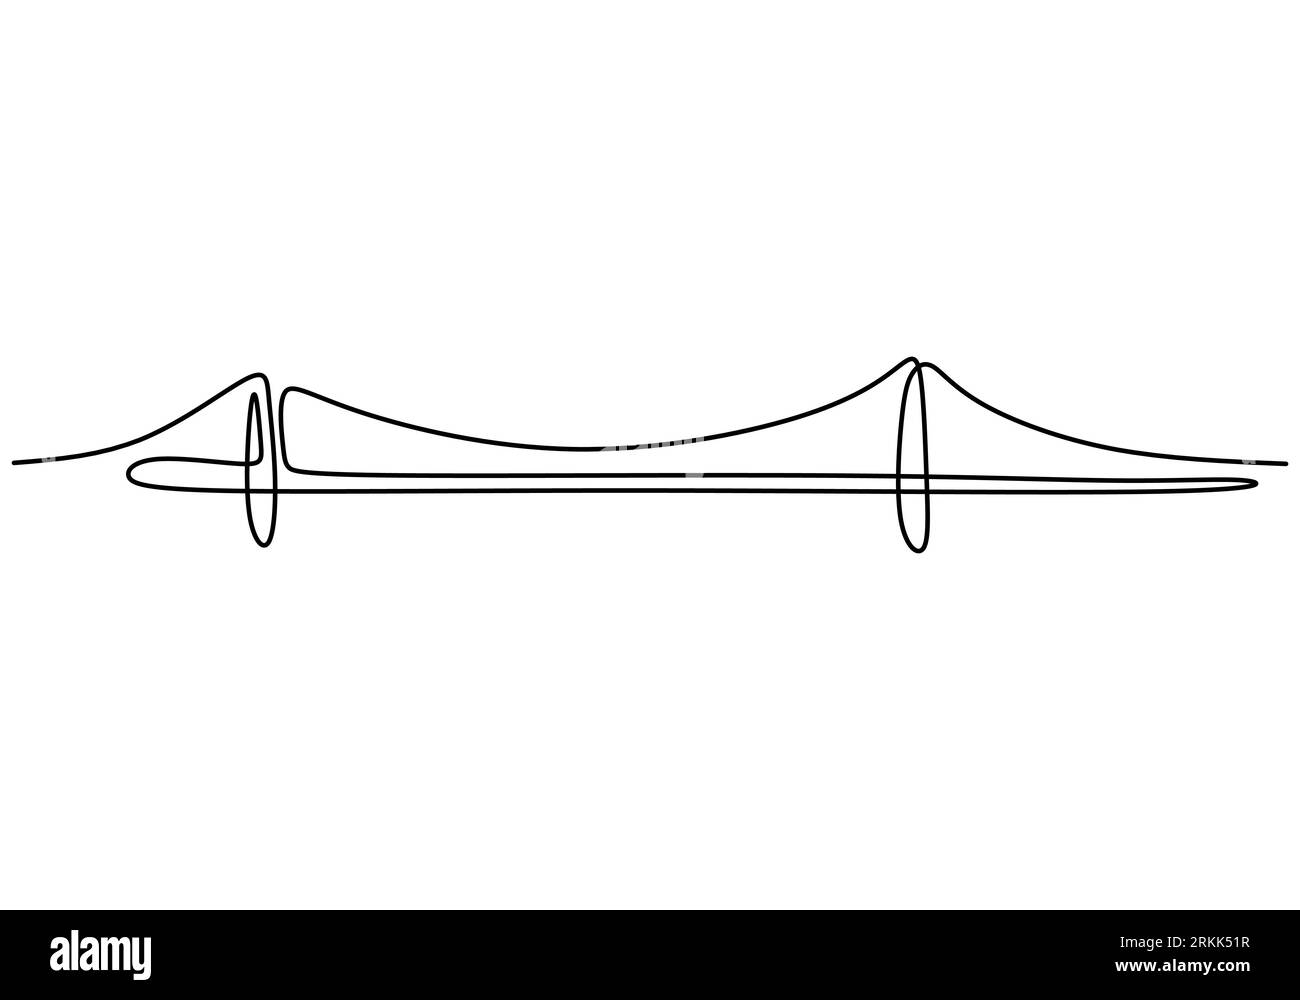 Giant bridge over river. Continuous one line of bridge drawing design ...